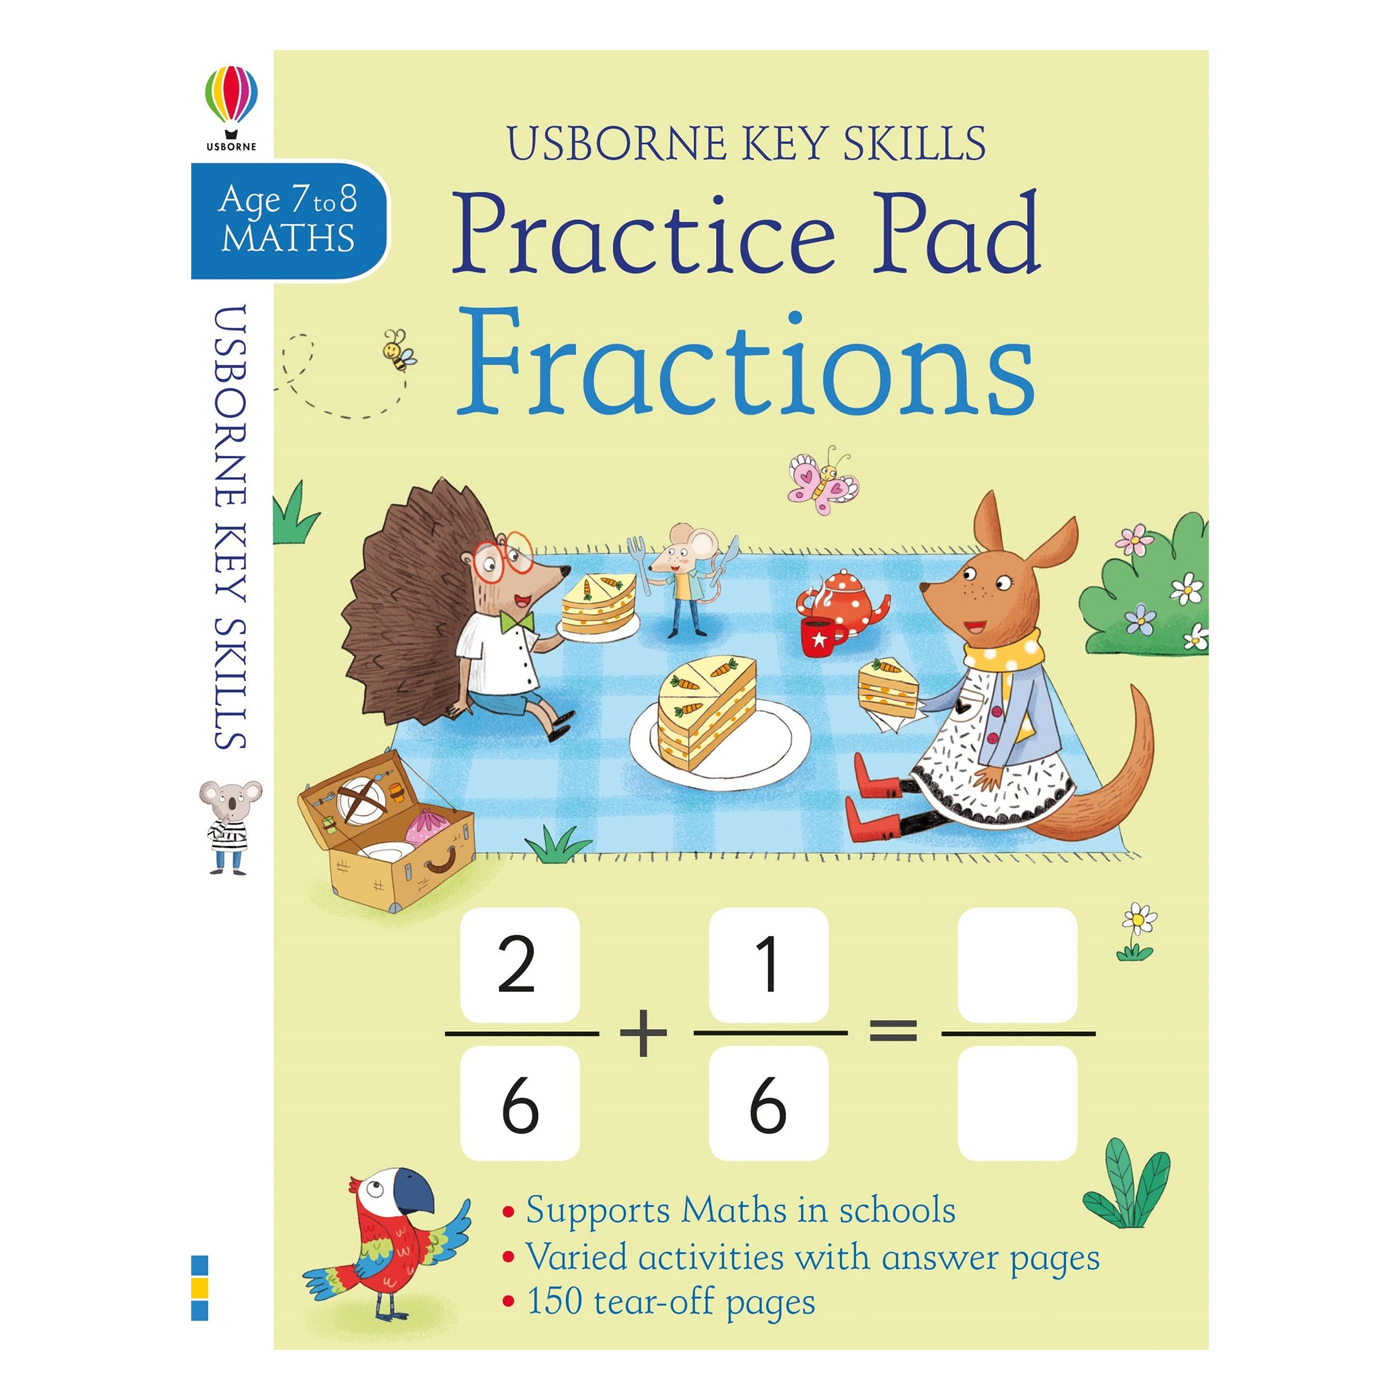 USBORNE Key Skills Fractions Practice Pad 7-8